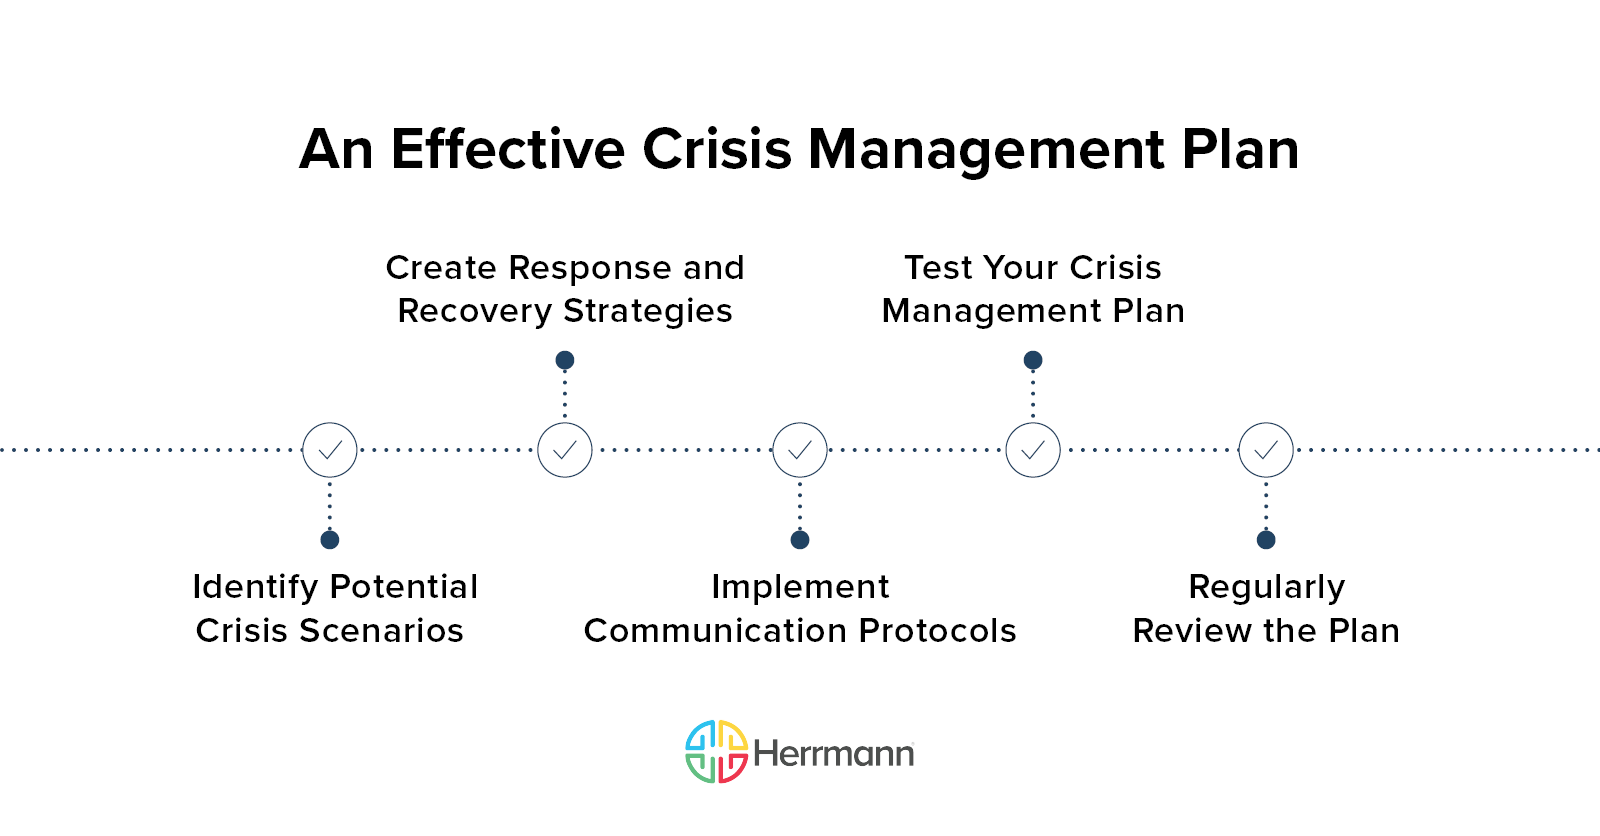 An Effective Crisis Management Plan